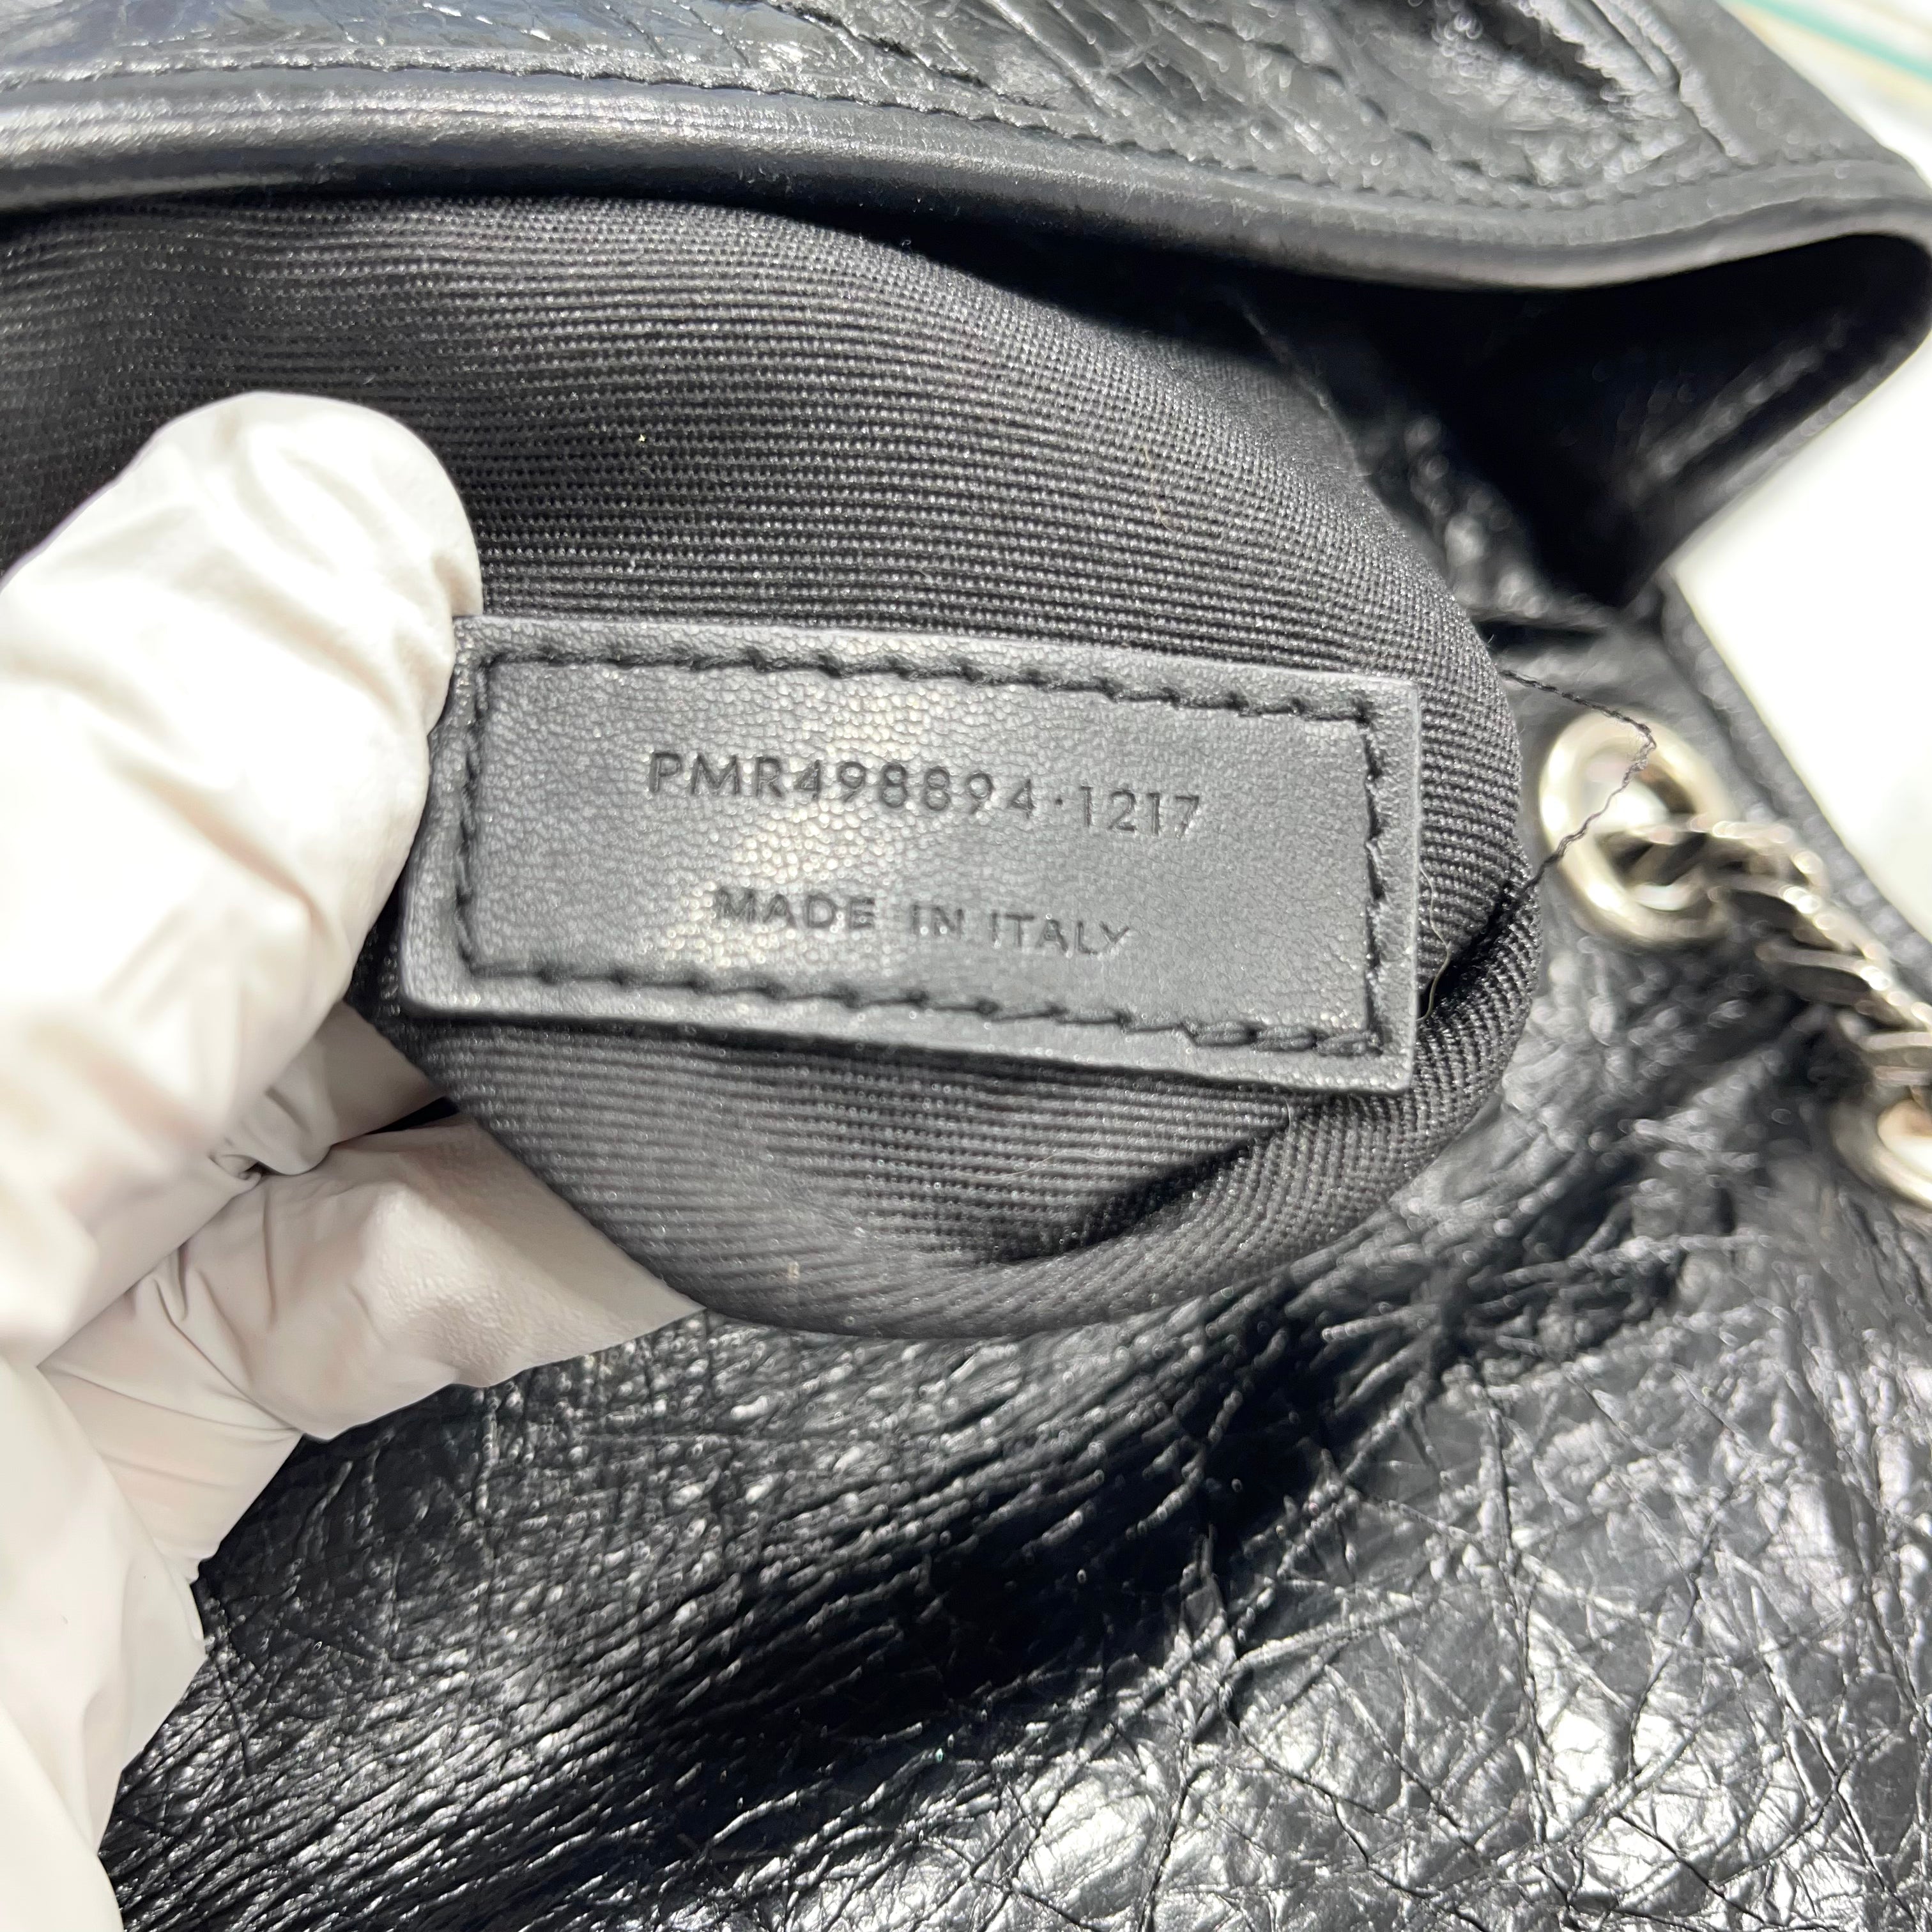 Niki patent leather crossbody bag Saint Laurent Black in Patent leather -  23803752